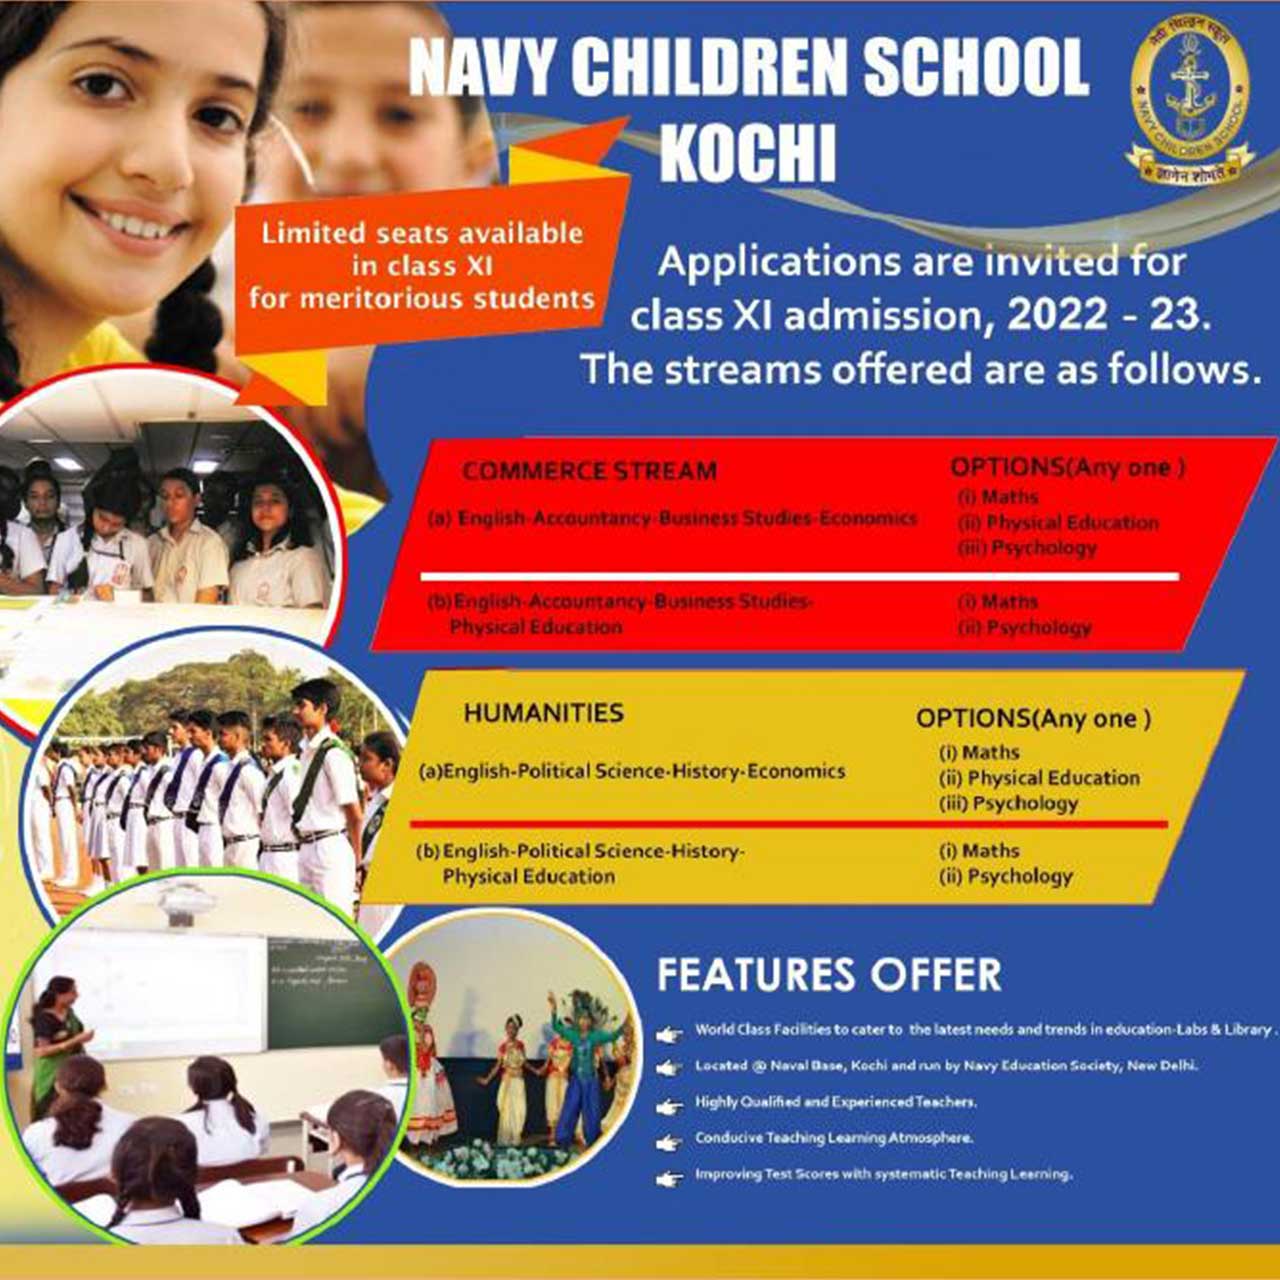 Navy Children School, Kochi